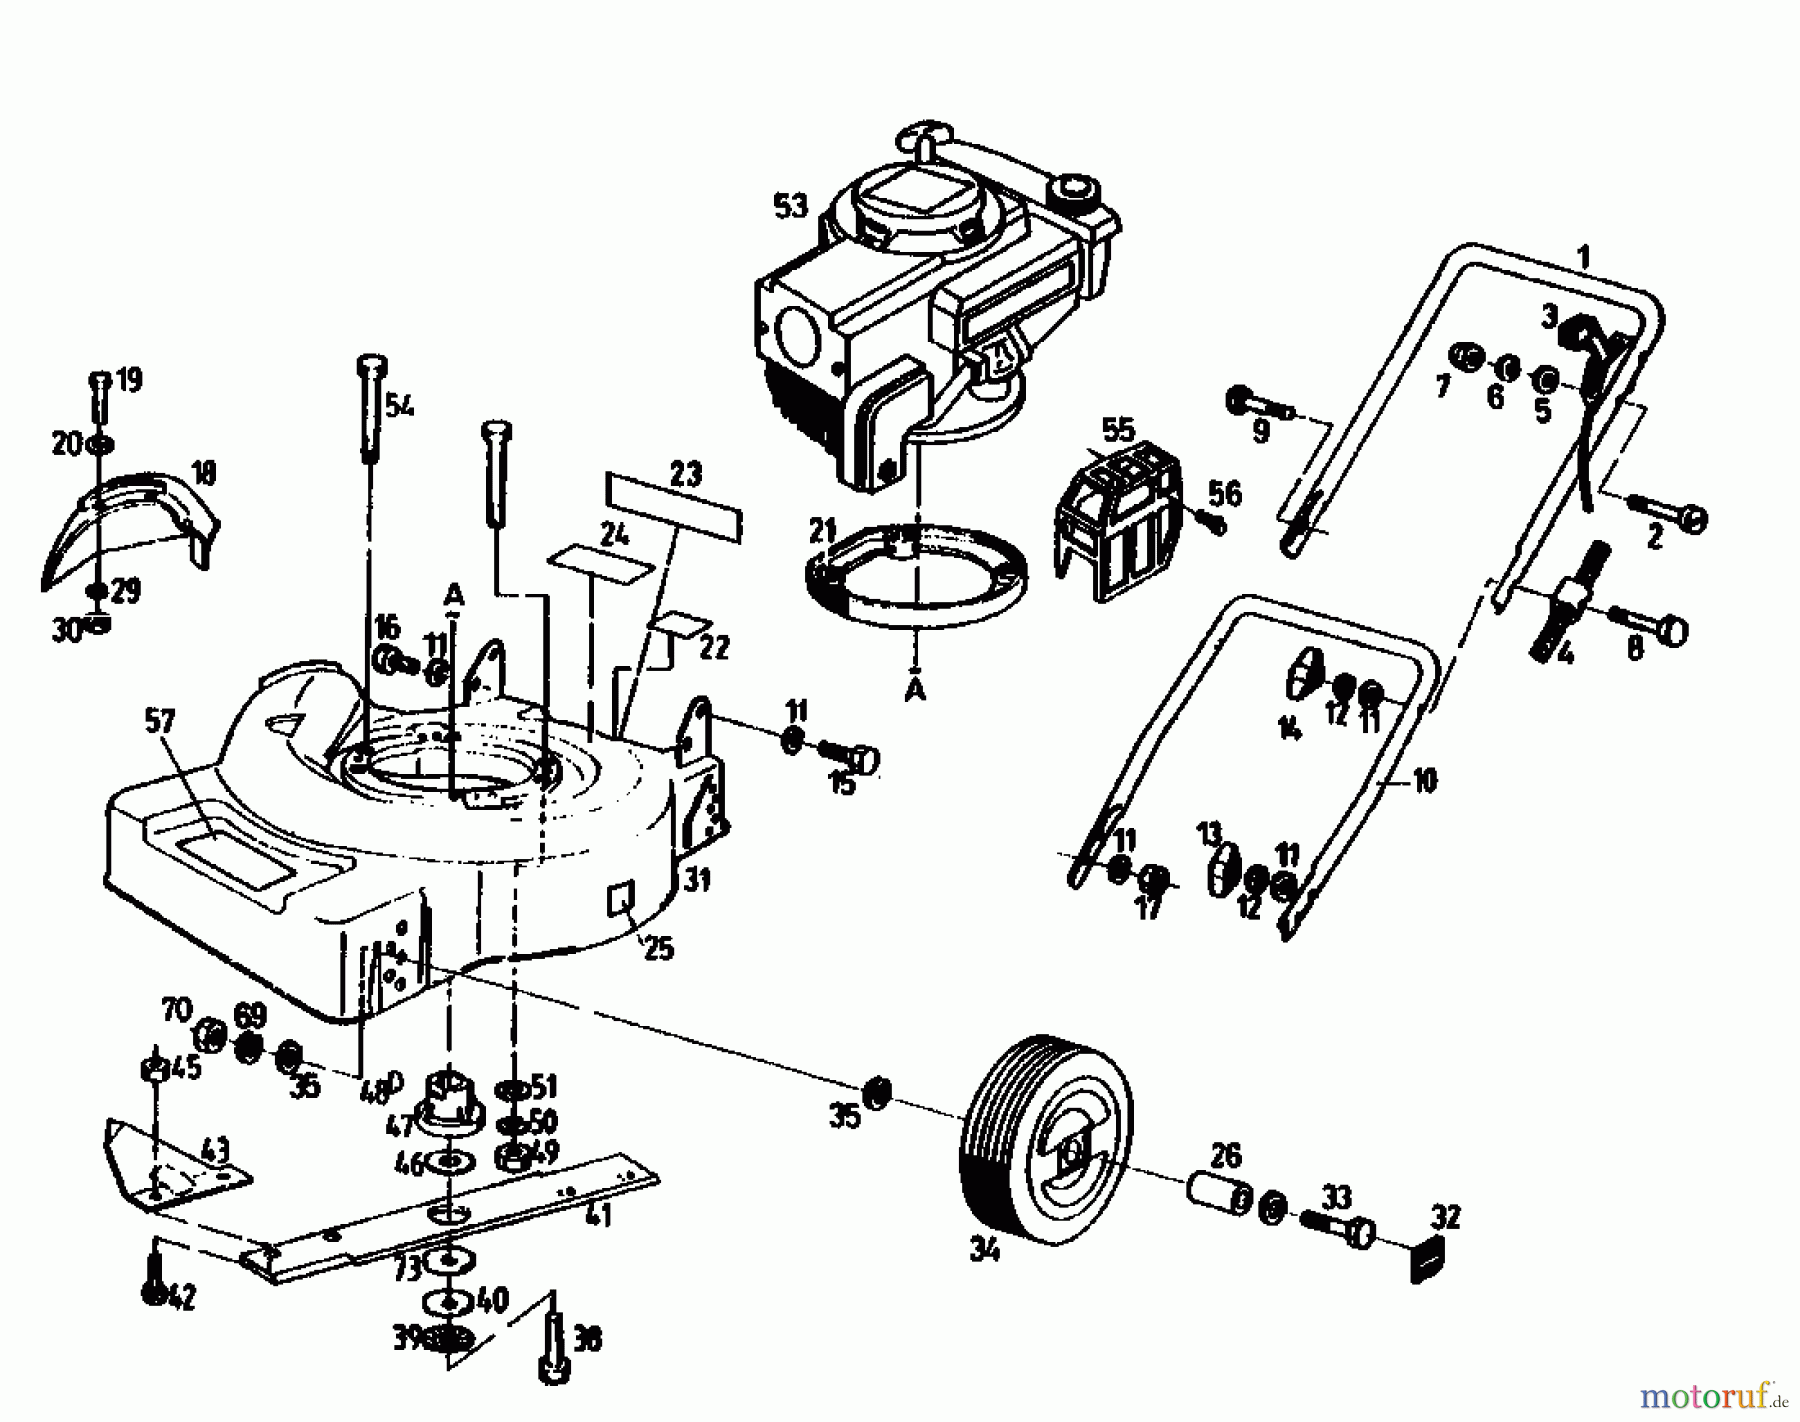  Golf Petrol mower 248 S 4 02670.01  (1990) Basic machine